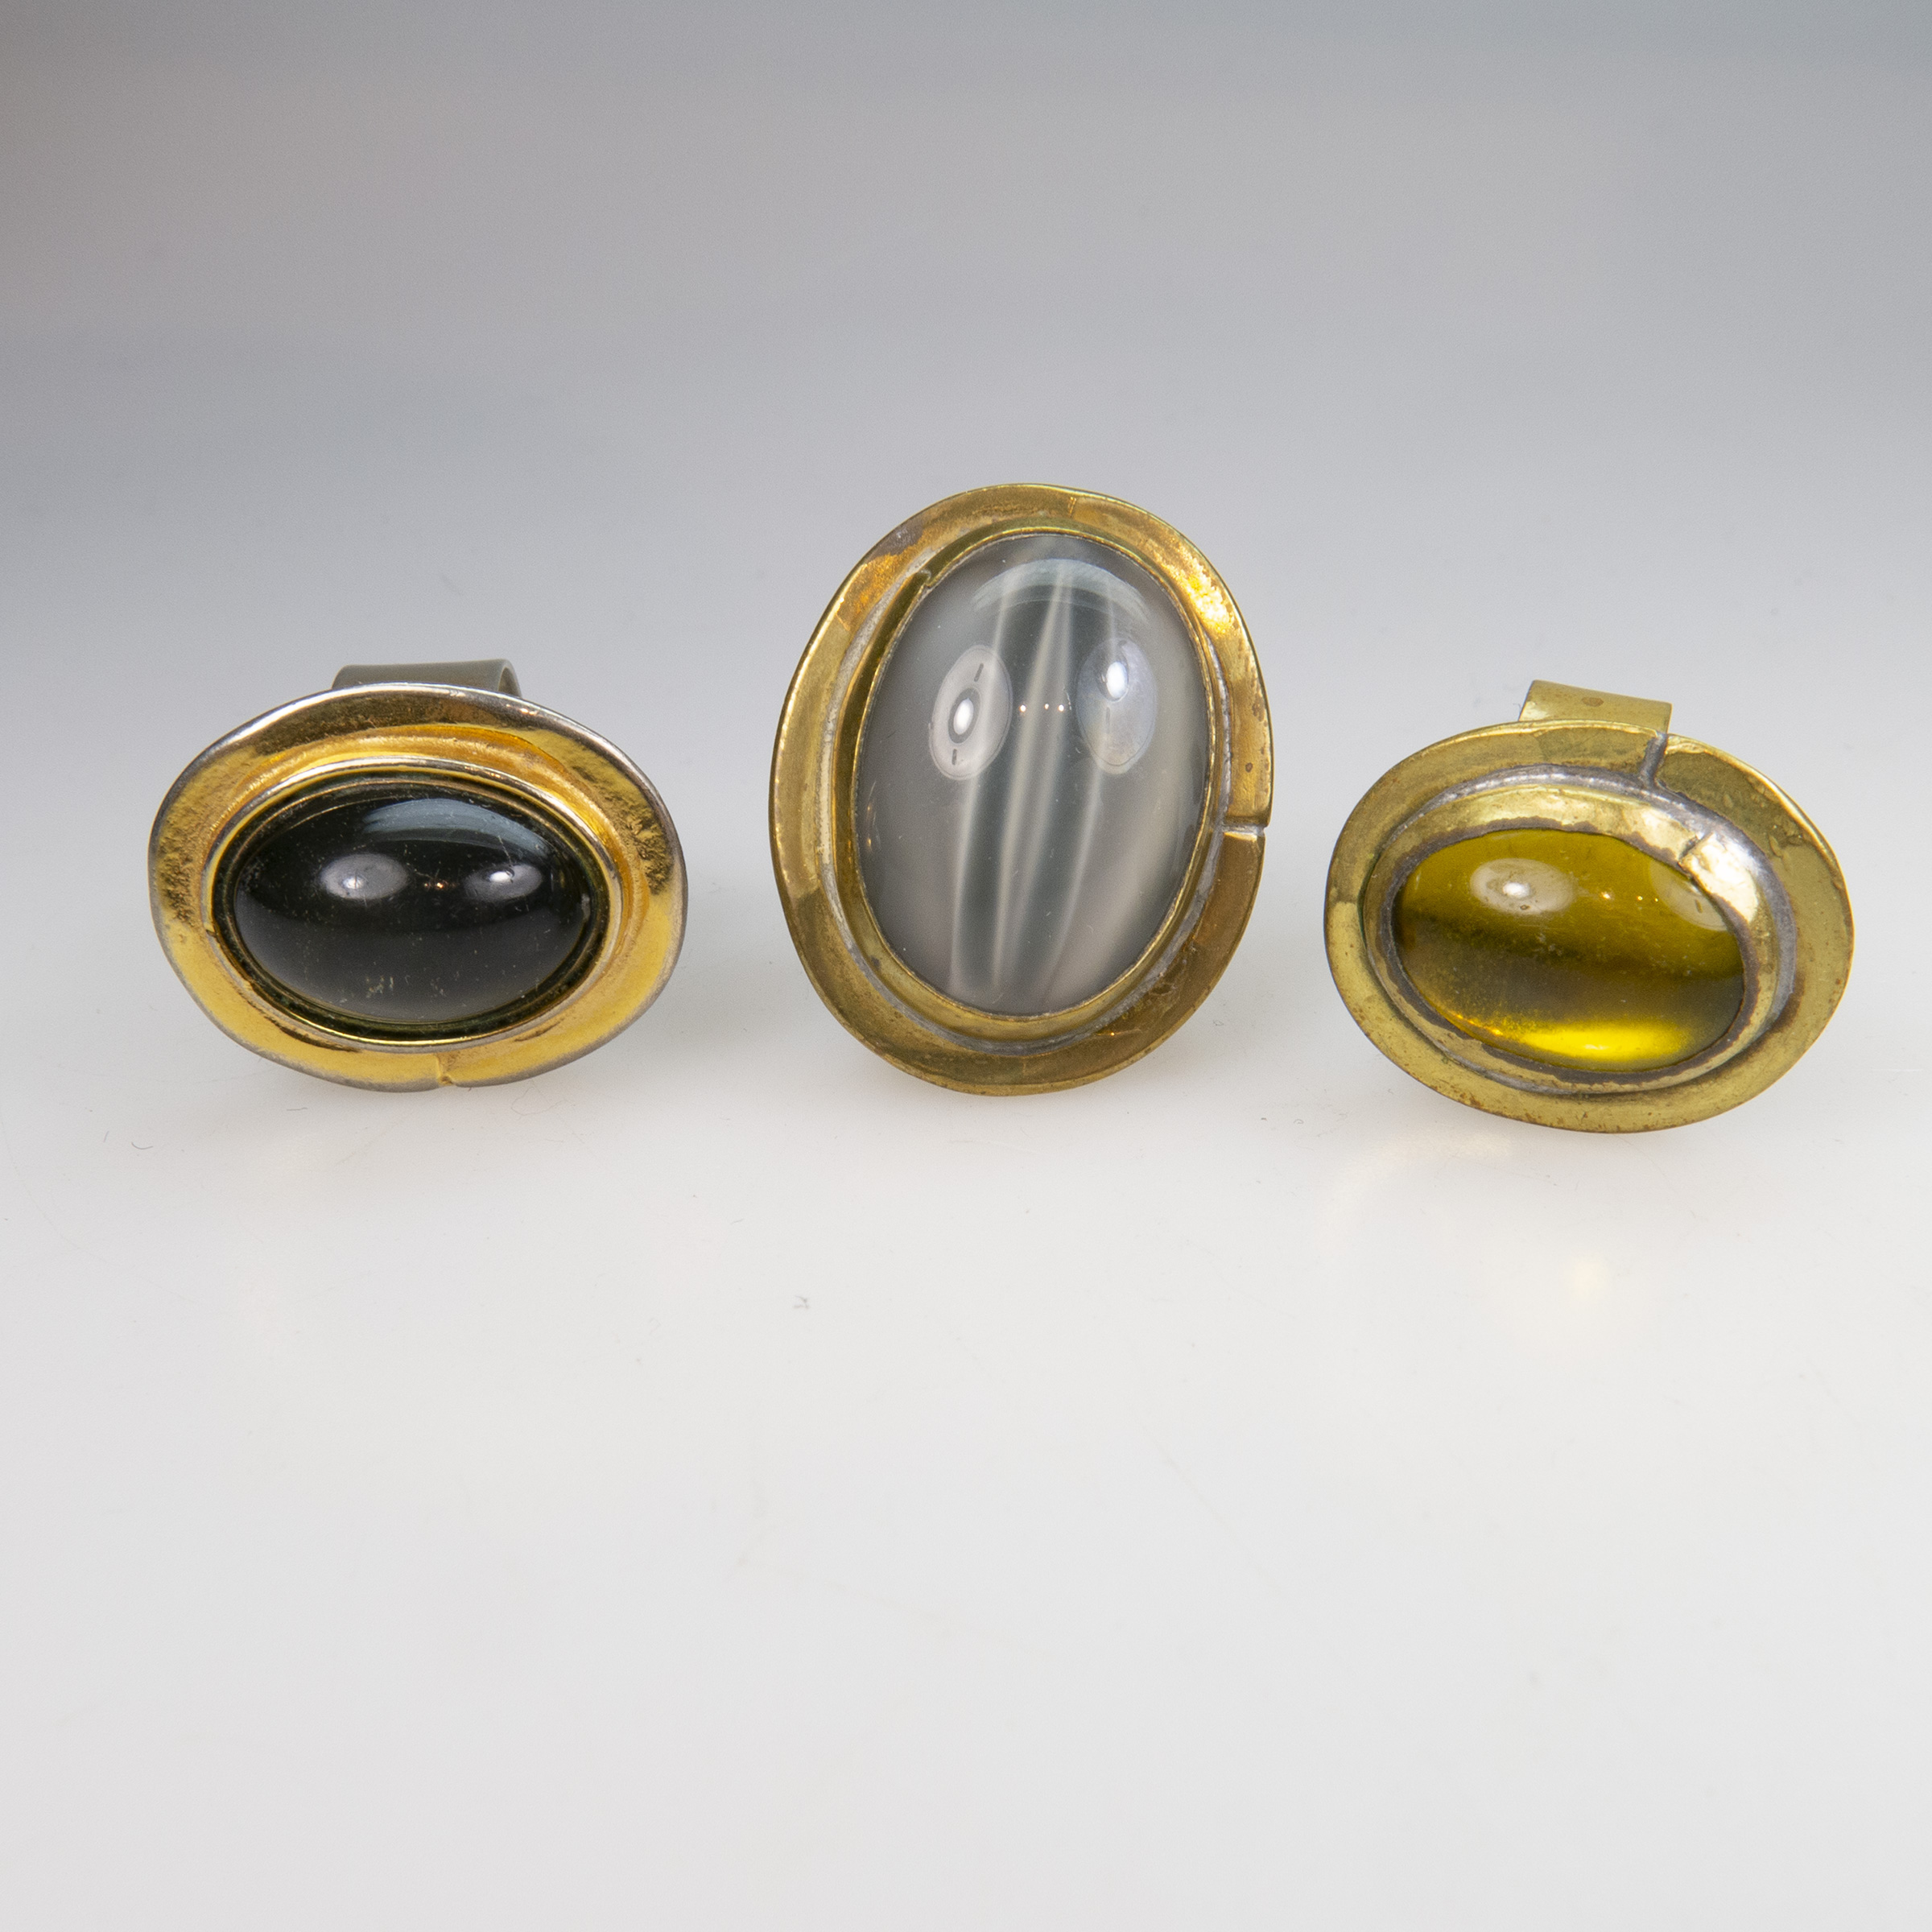 Three Rafael Alfandary Brass And Gold-Tone Metal Rings